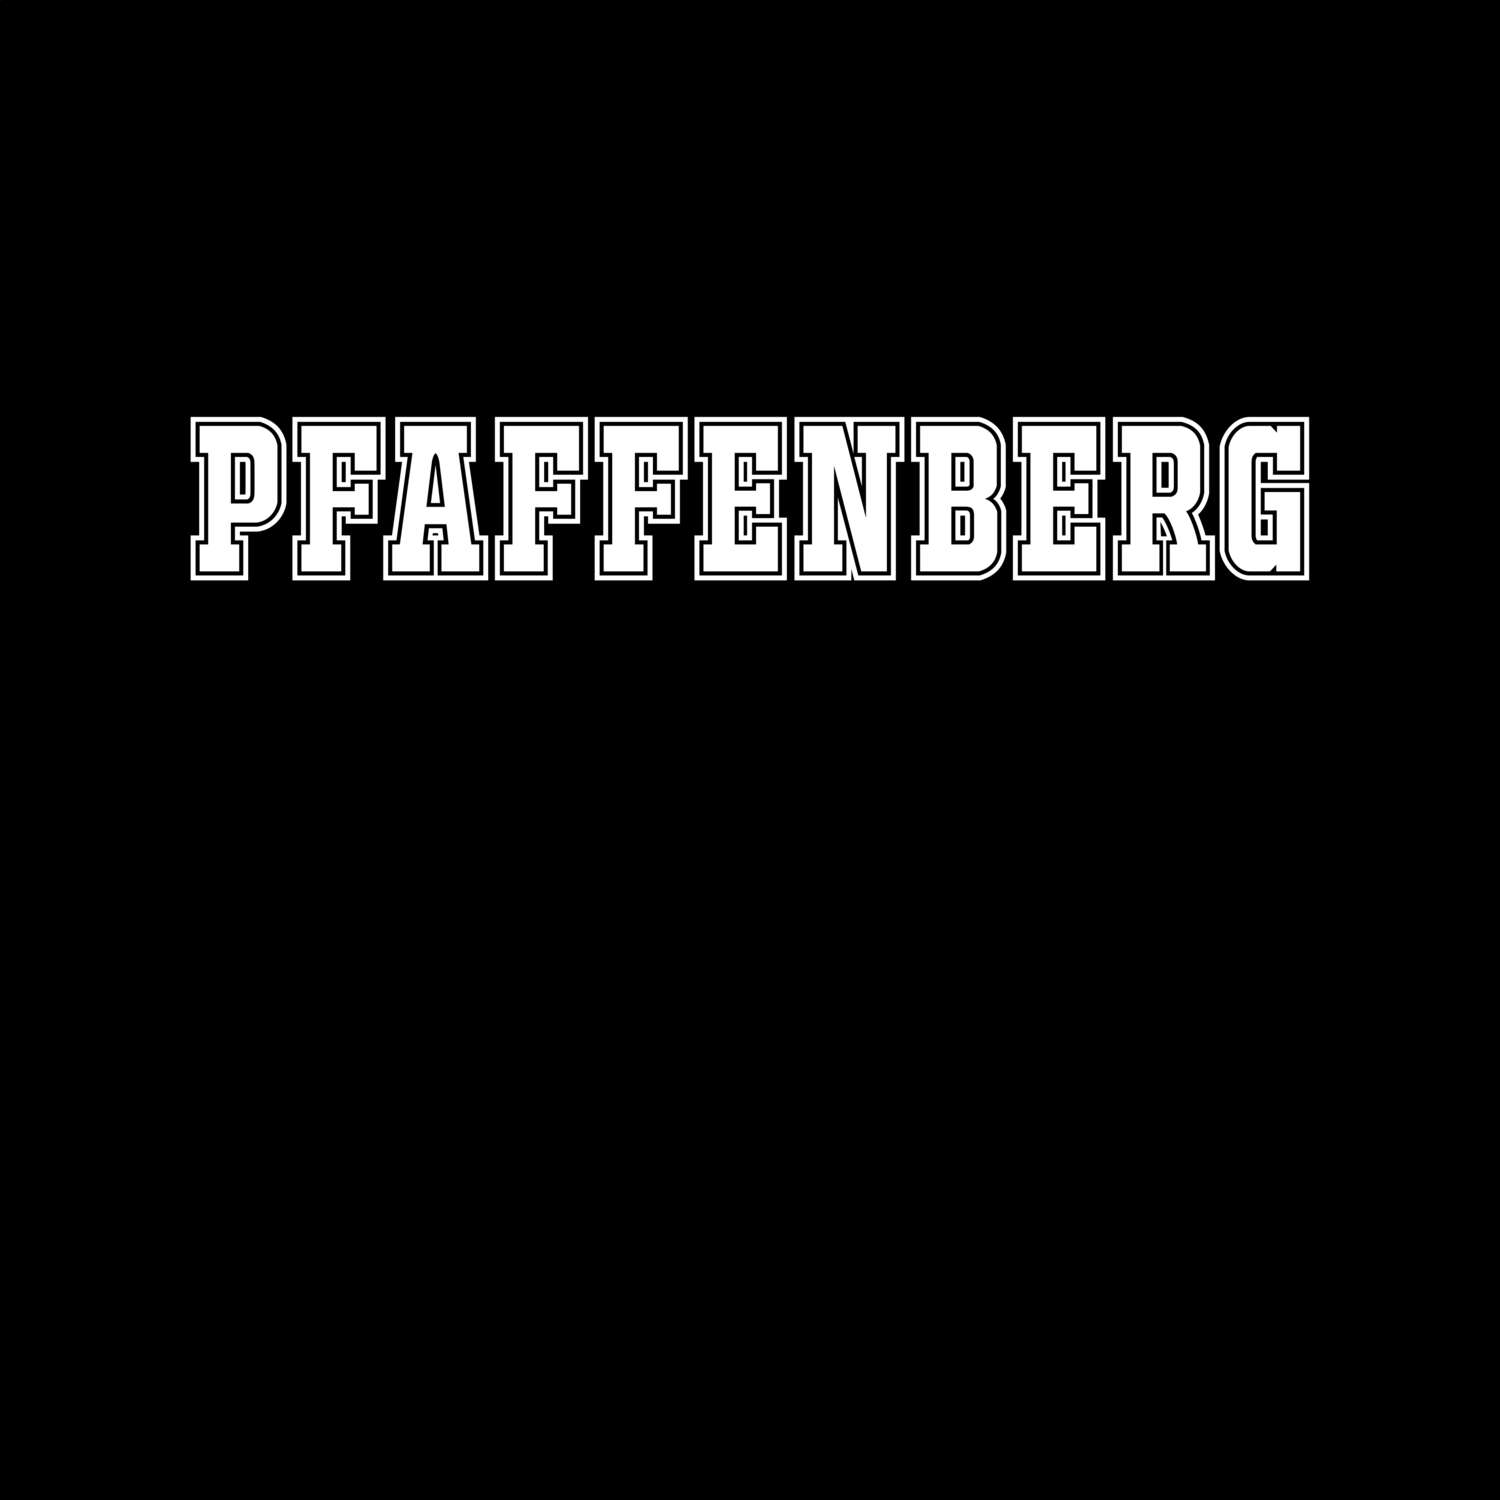 Pfaffenberg T-Shirt »Classic«